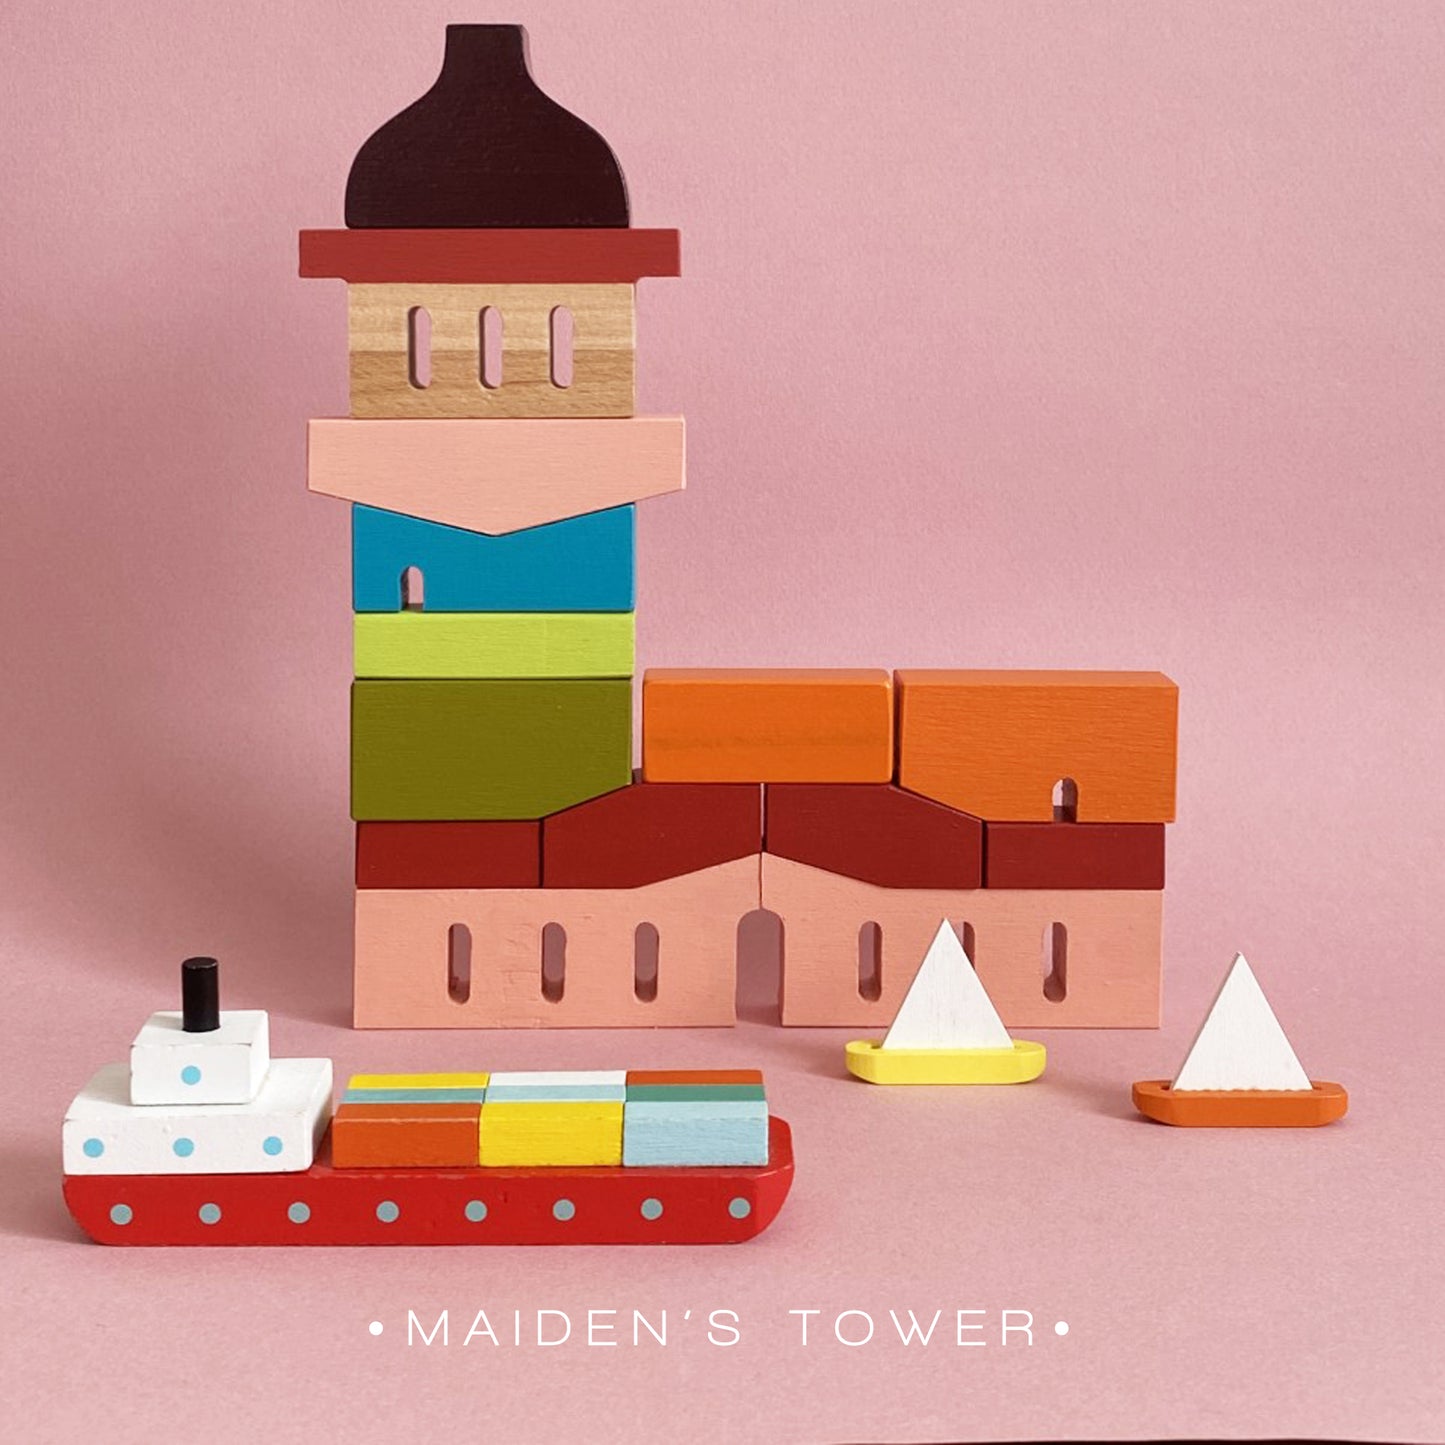 Famous landmarks - Istanbul Maiden's Tower wooden blocks